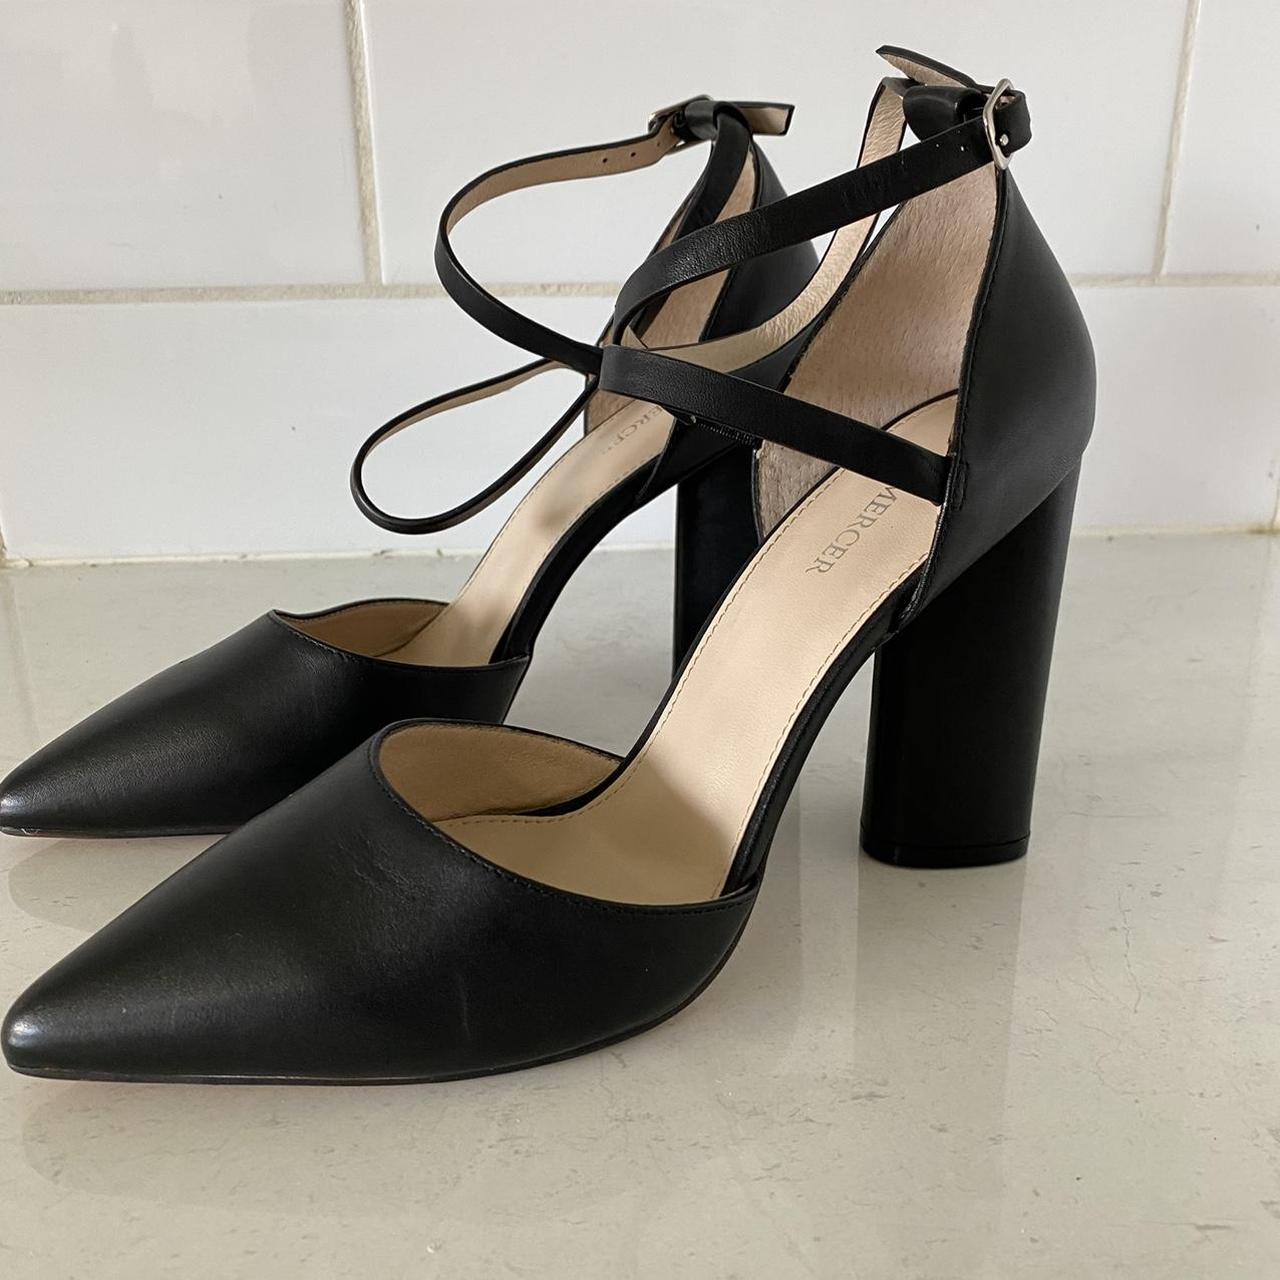 Jo Mercer ‘eastbound’ black dress high heels with... - Depop